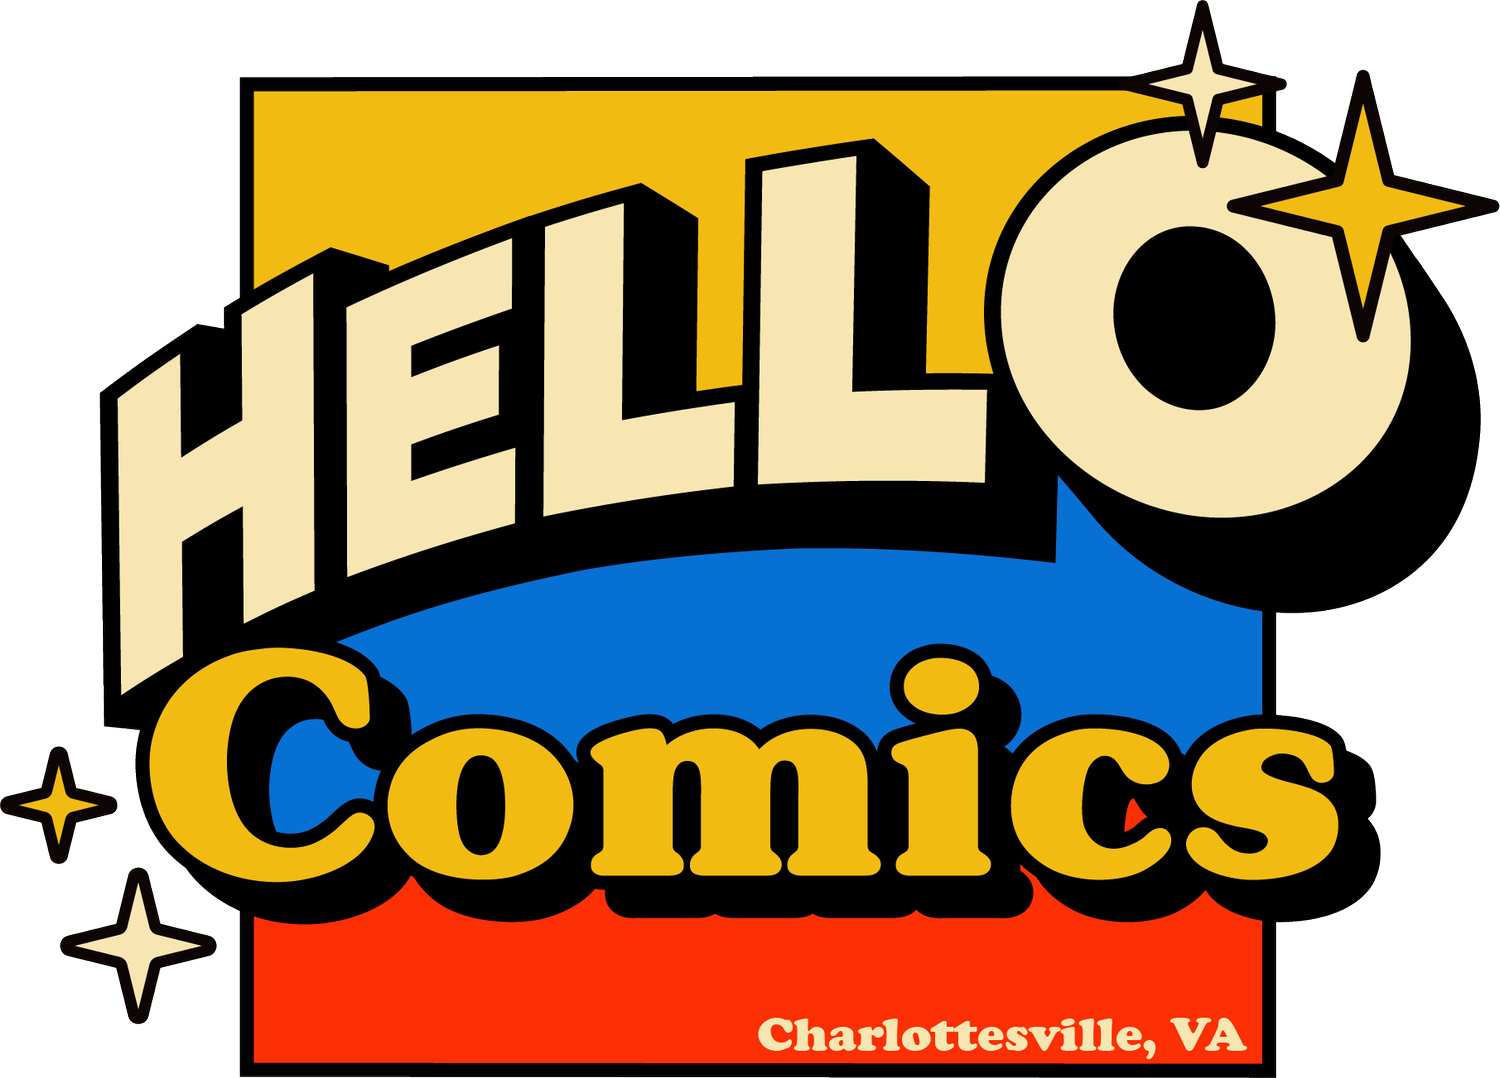 Hello Comics